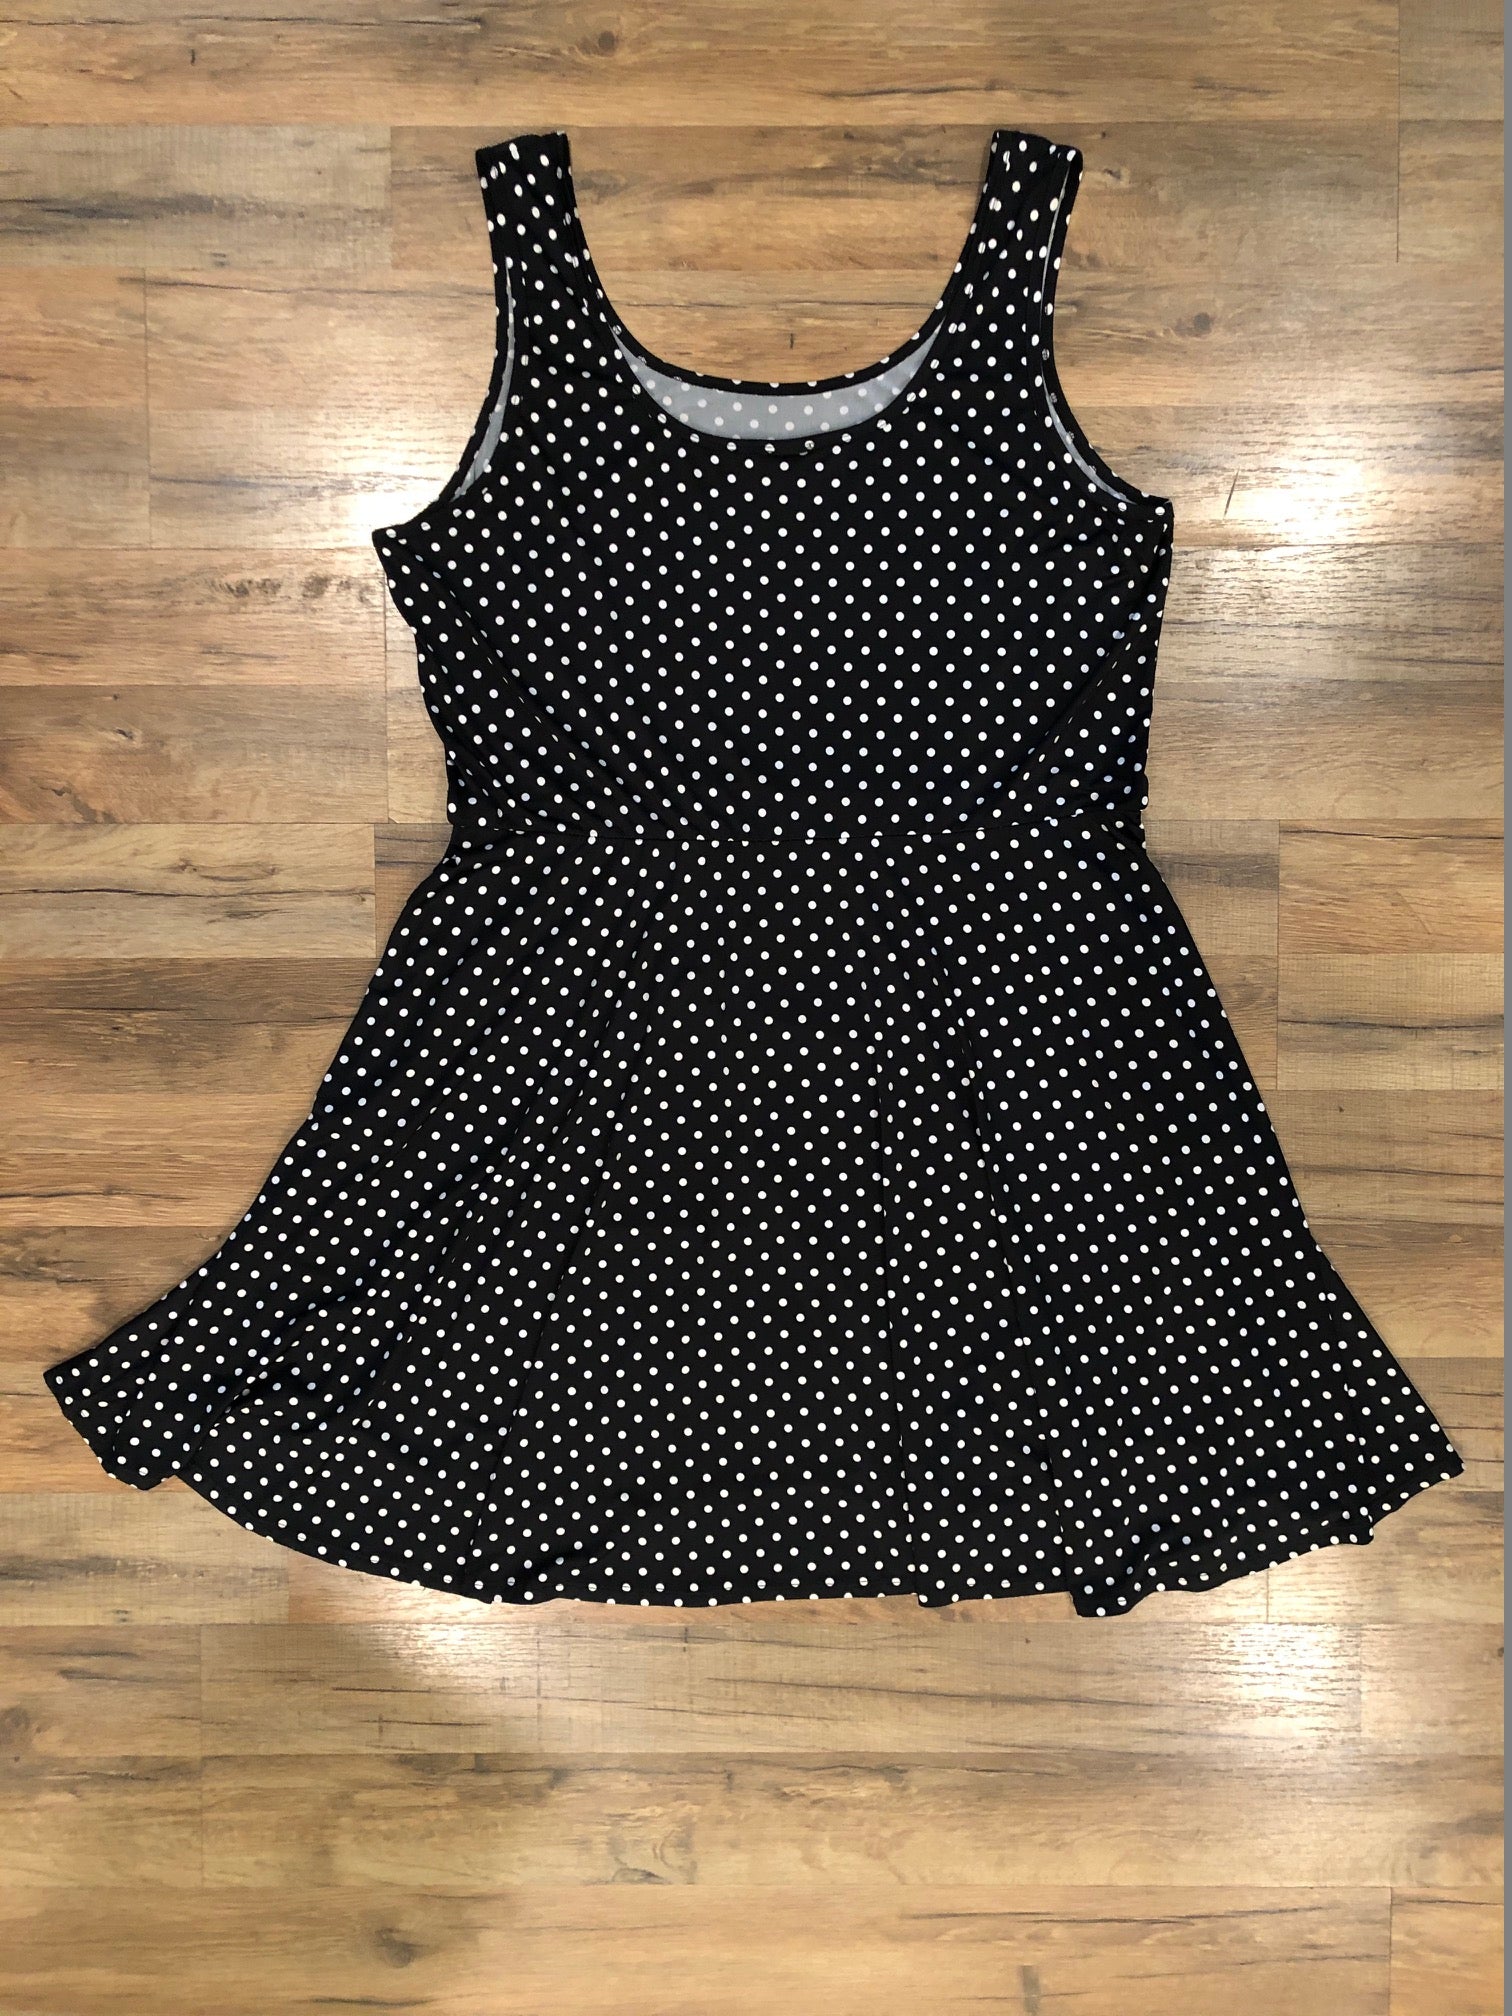 flat lay of polka dot dress